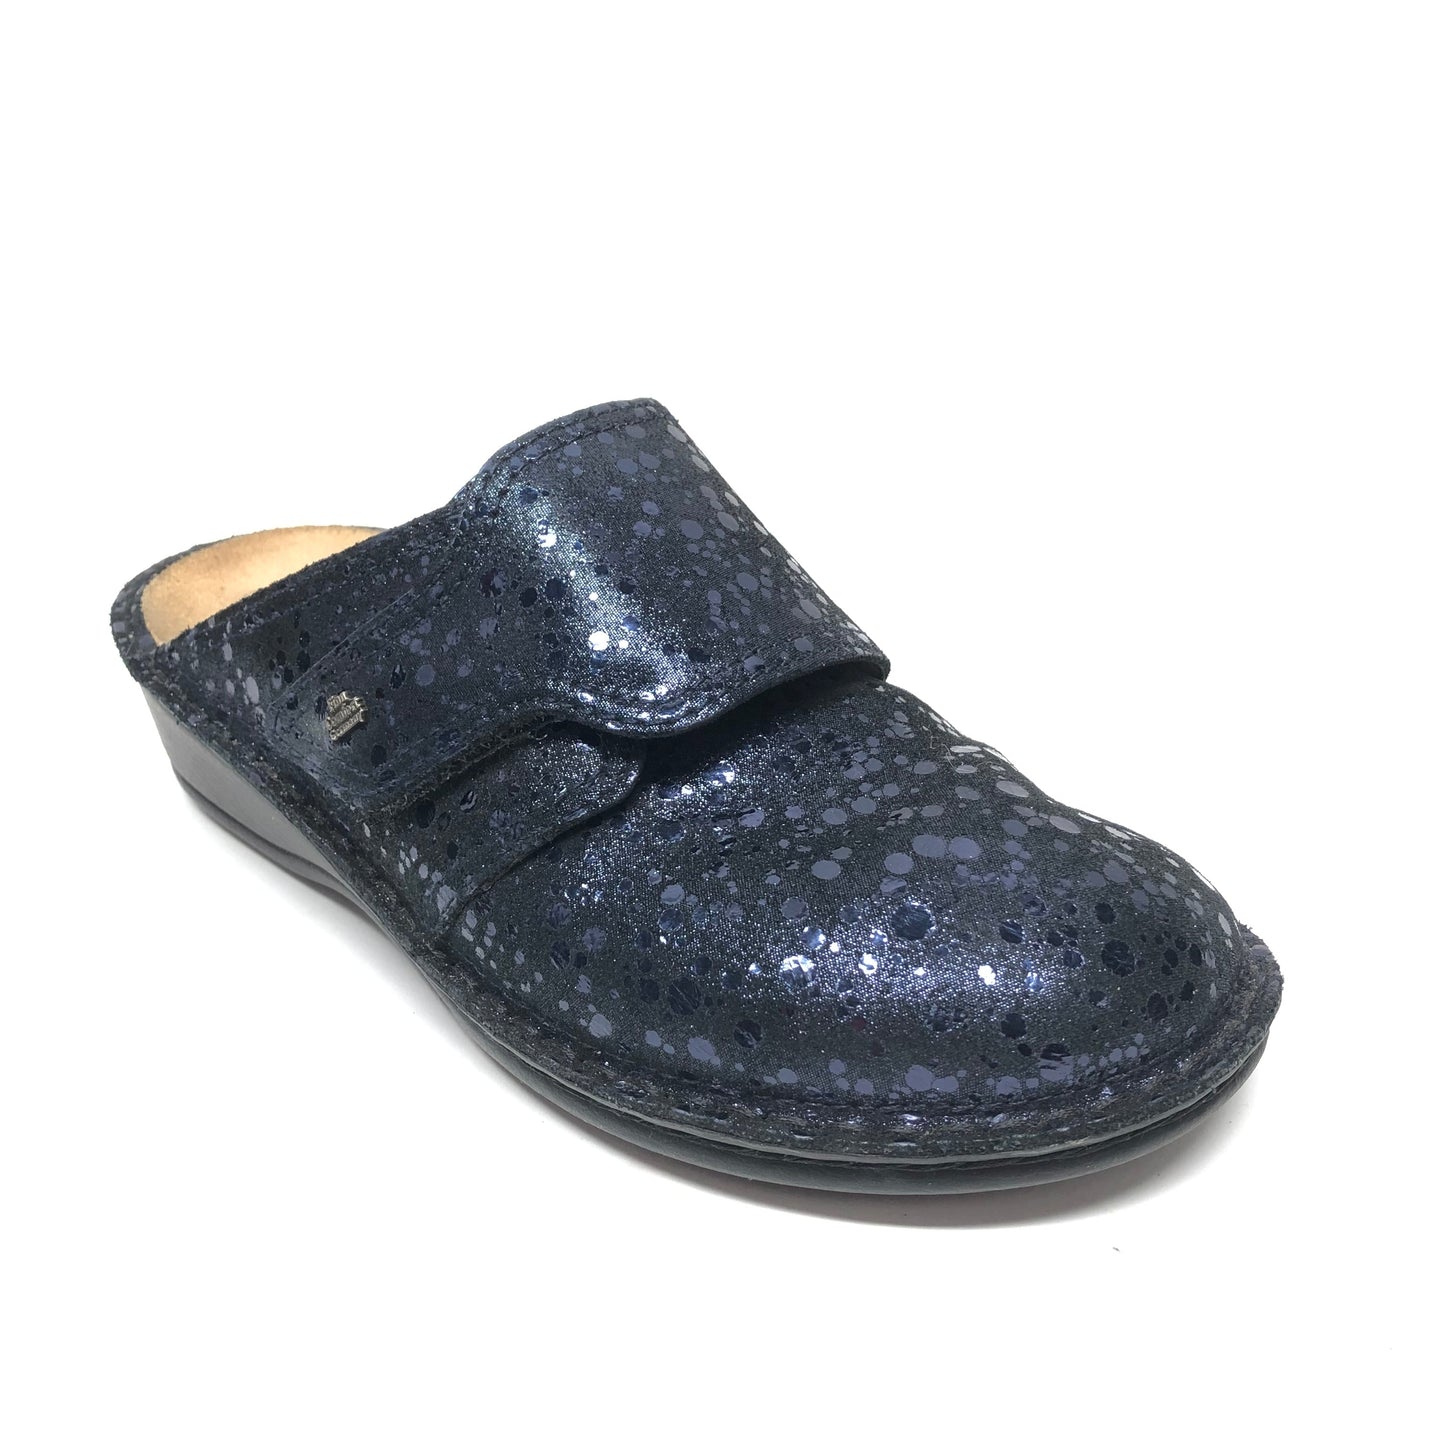 Black & Blue Sandals Heels Wedge Finn Comfort, Size 7